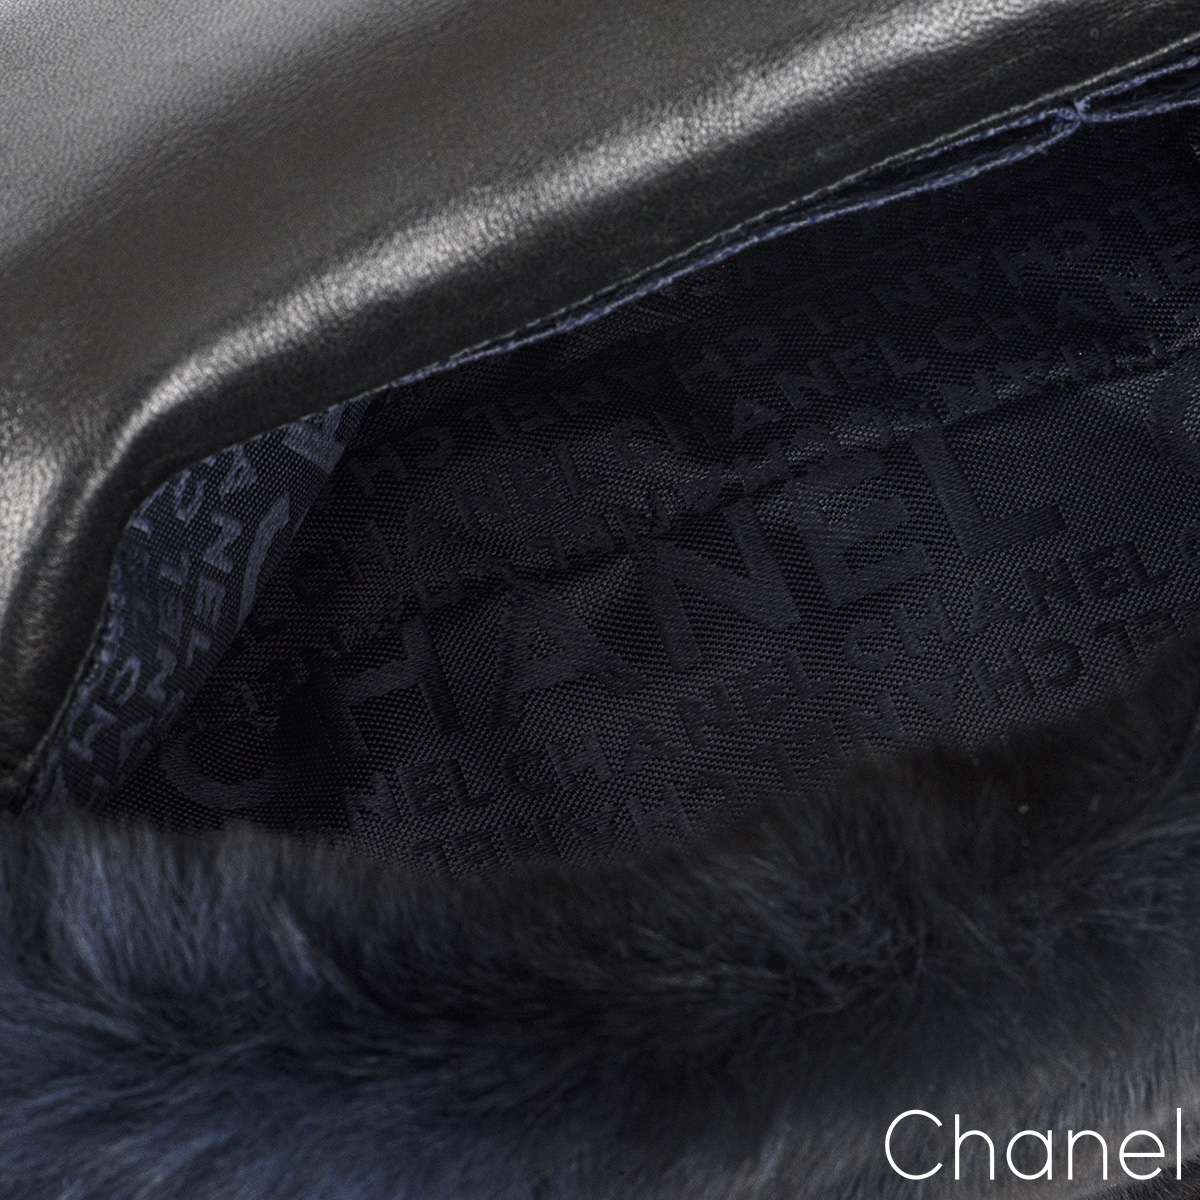 Chanel Orylag Triple Chain Flap Bag